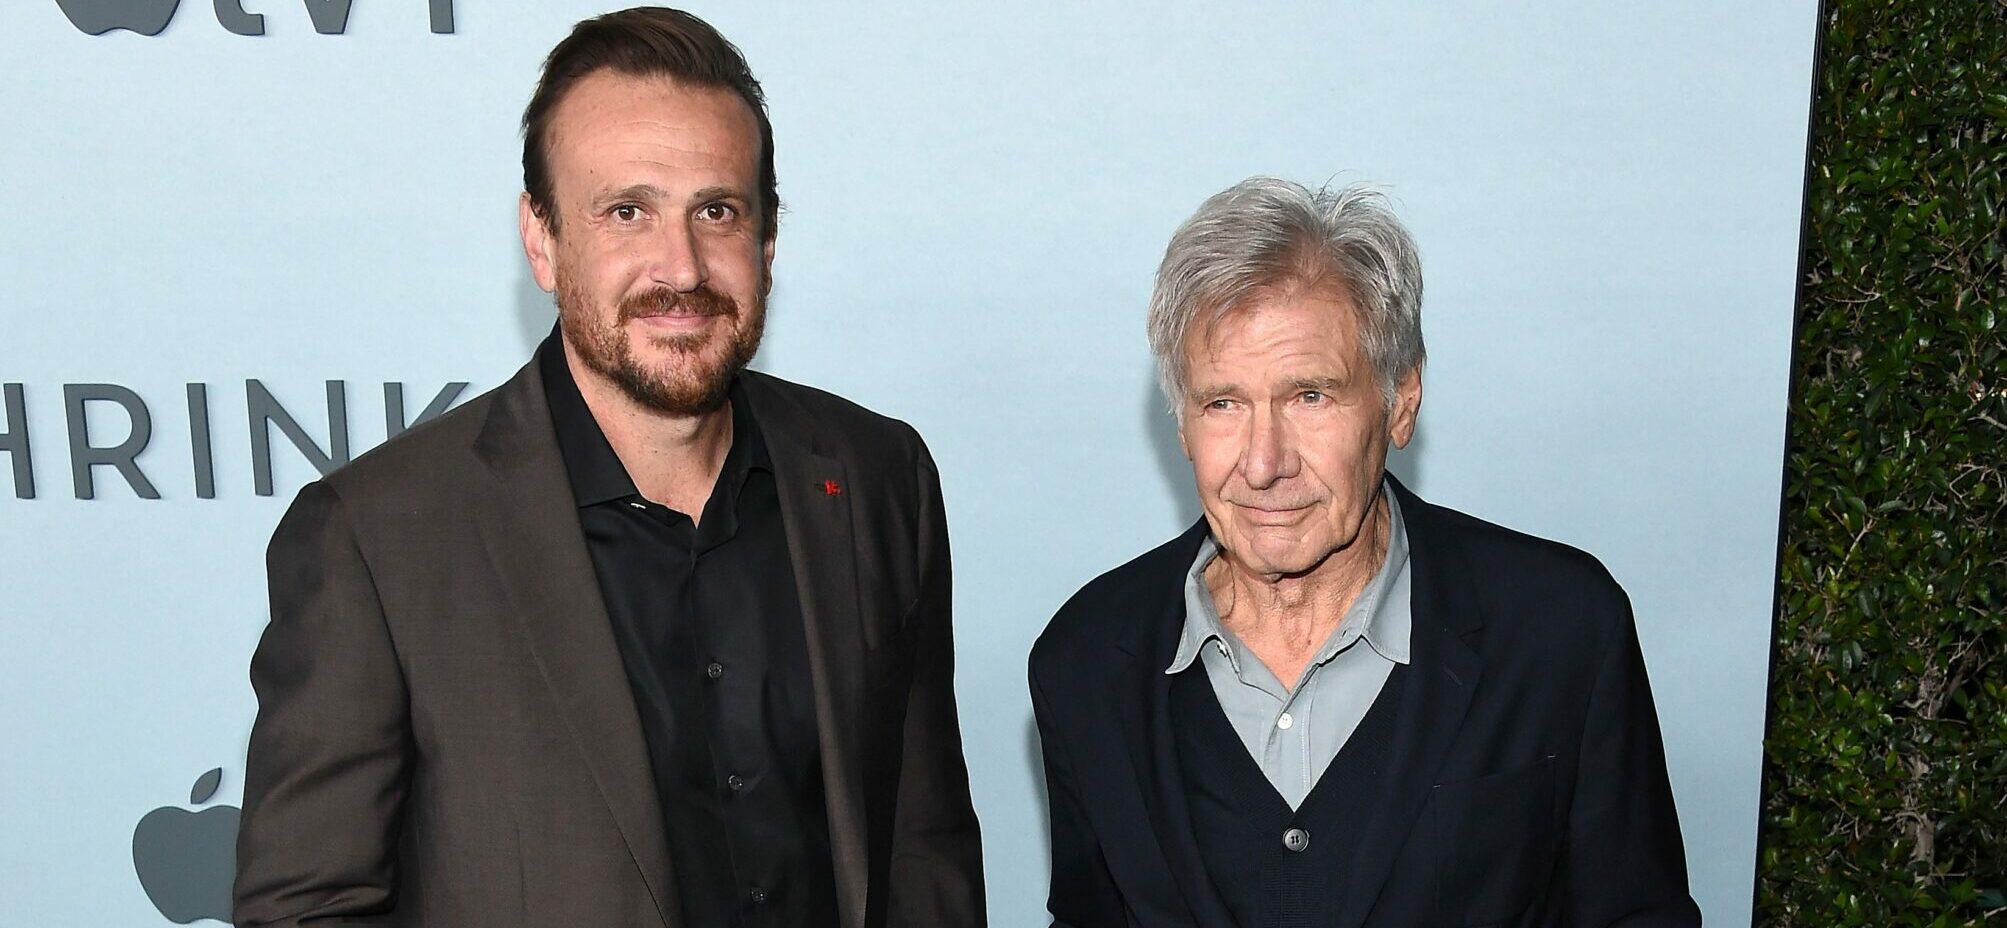 Jason Segel Says ‘Shrinking’ Costar Harrison Ford Is ‘Really Good’ At Improv Comedy